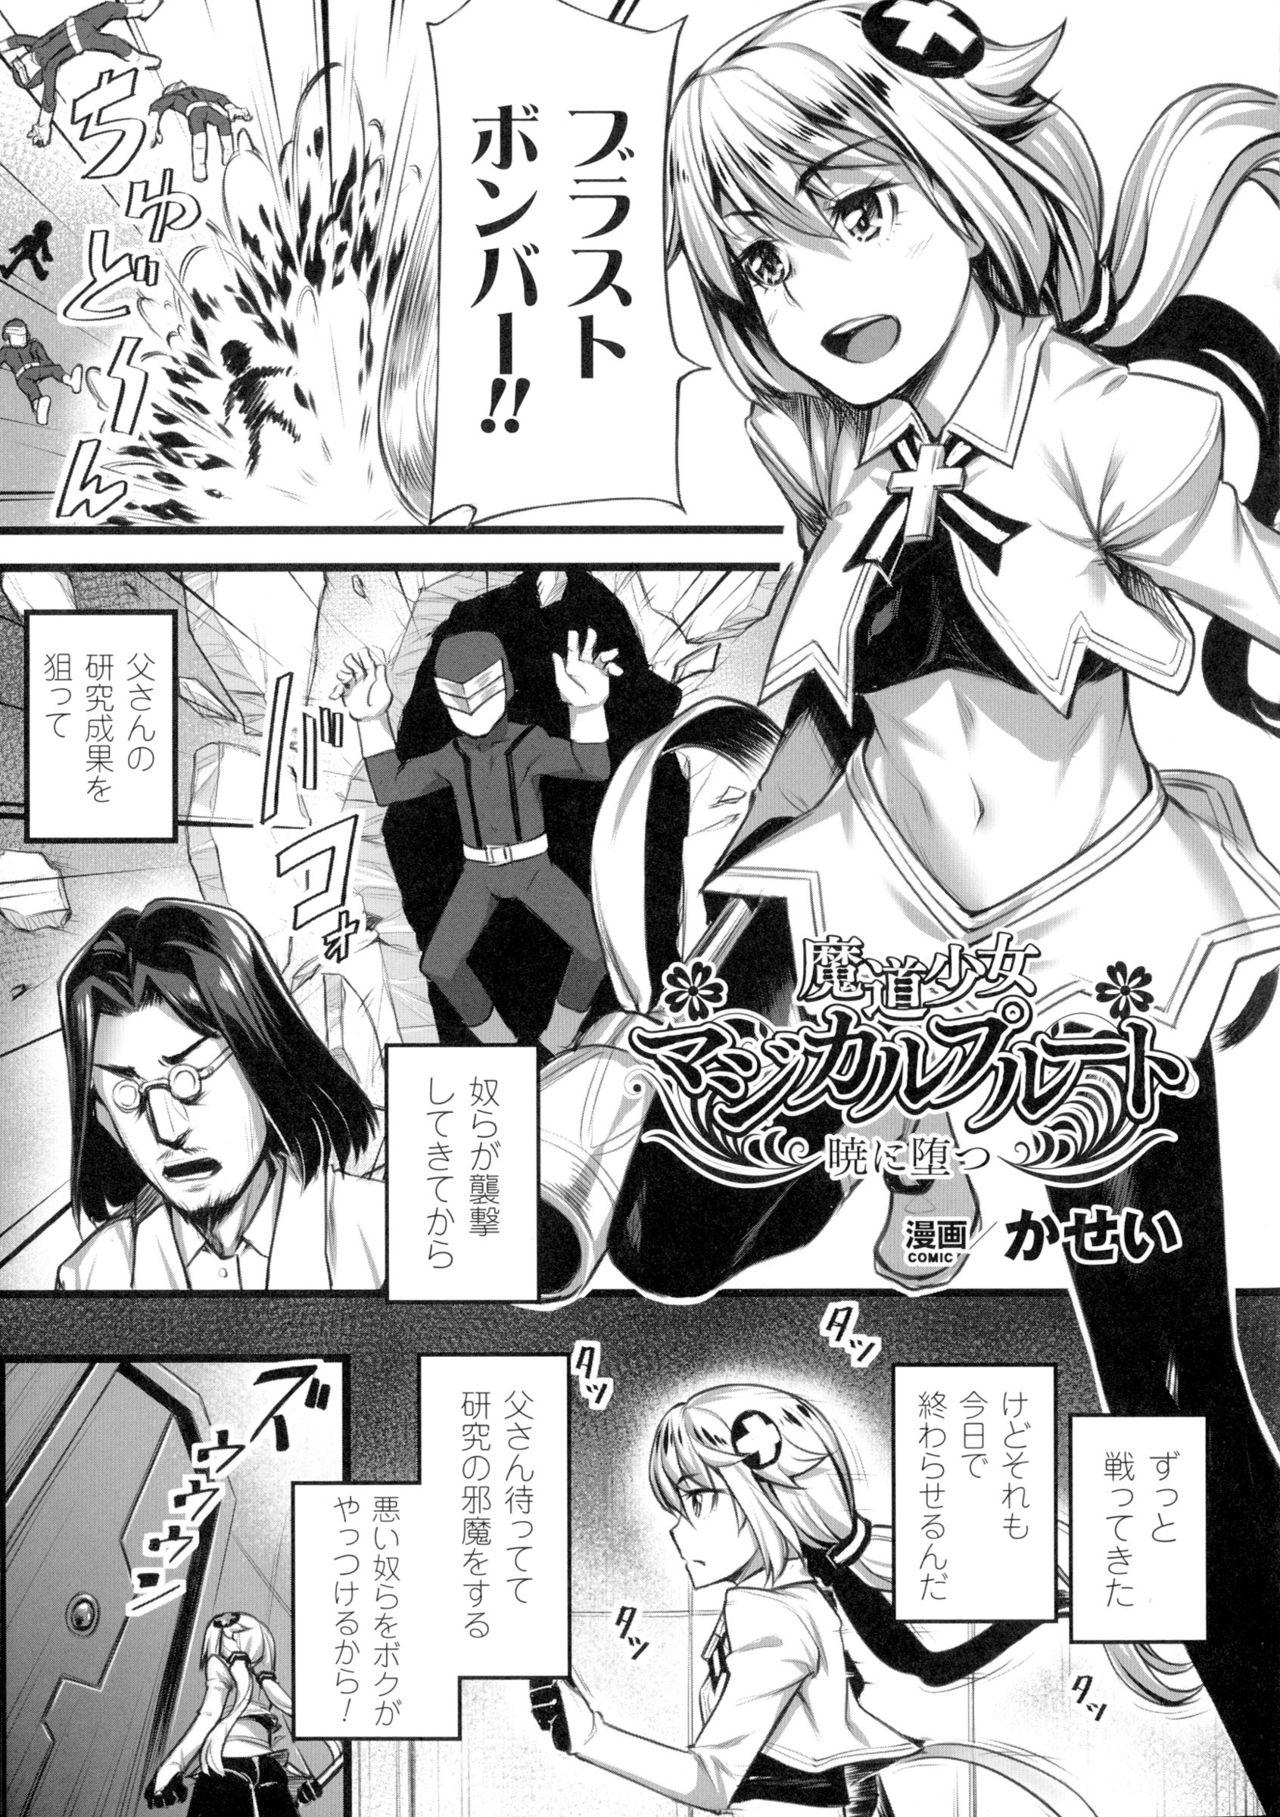 Seigi no Heroine Kangoku File DX Vol. 1 212